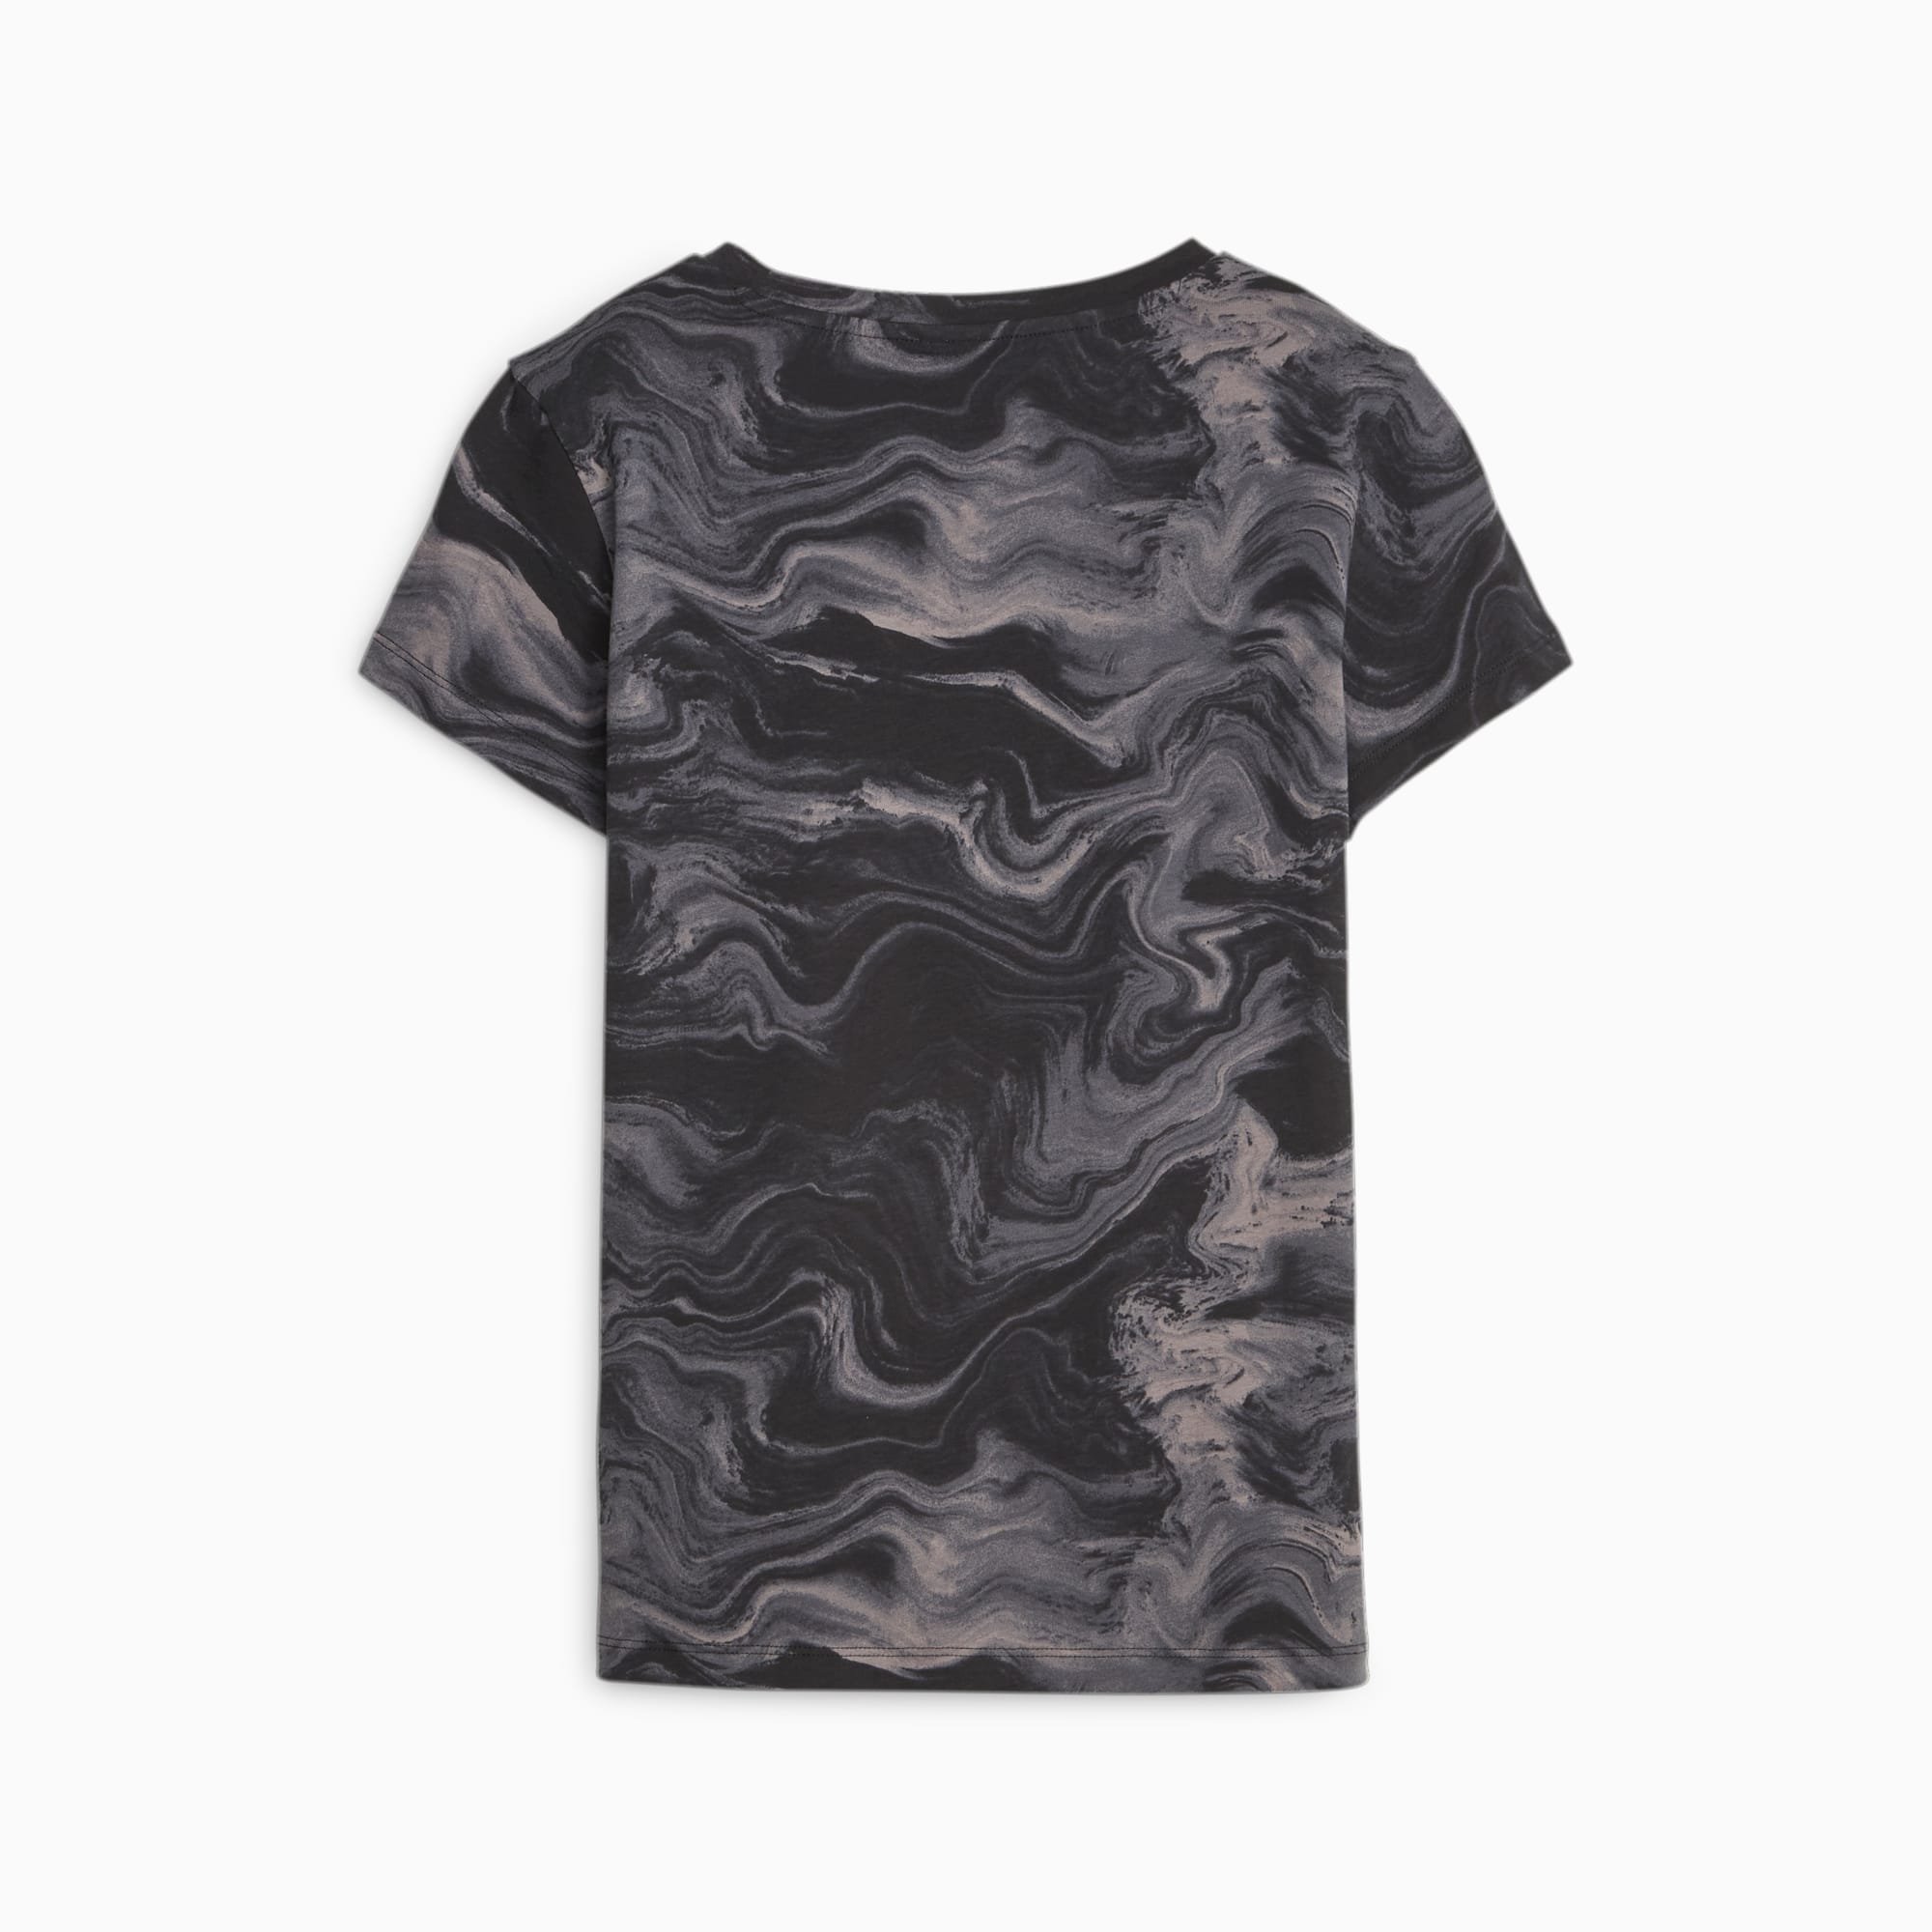 PUMA Ess+ Marbleized Women's T-Shirt, Black, Size M, Clothing